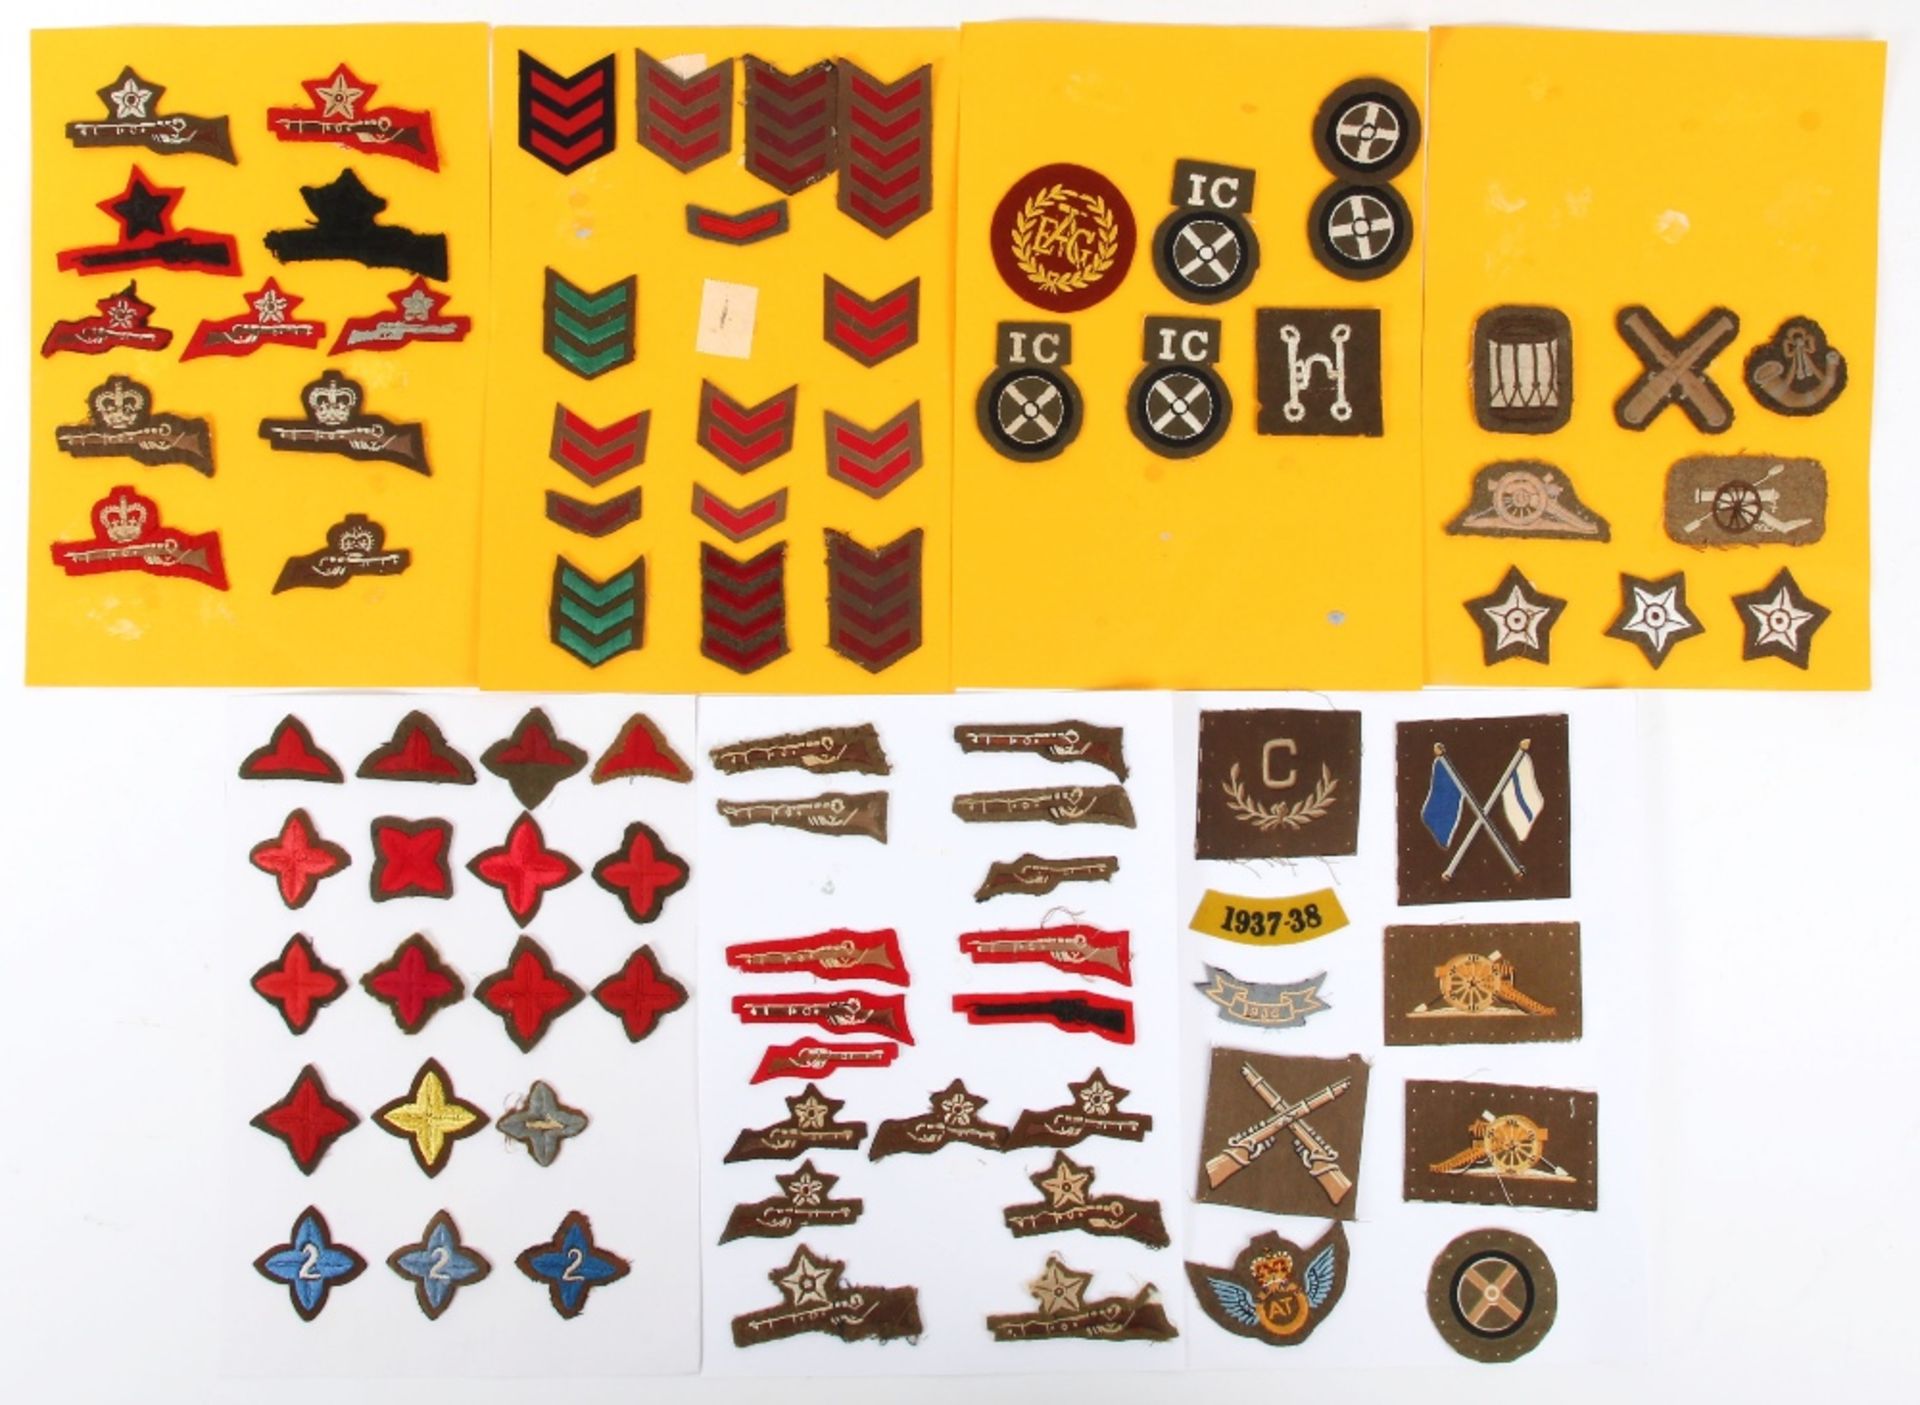 British Army cloth trade, rank and proficiency badges